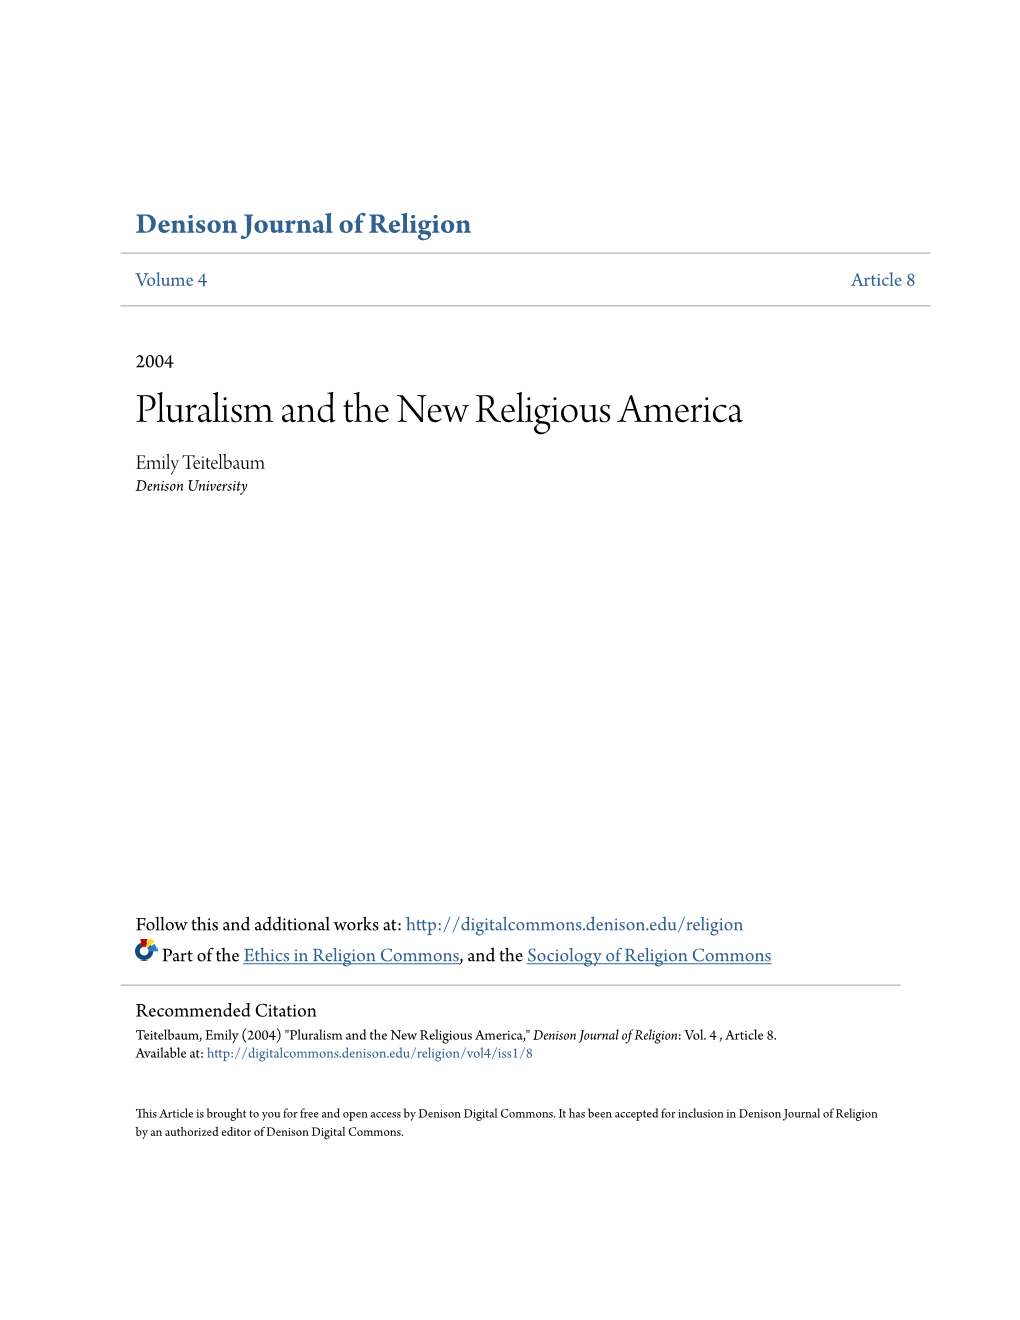 Pluralism and the New Religious America Emily Teitelbaum Denison University